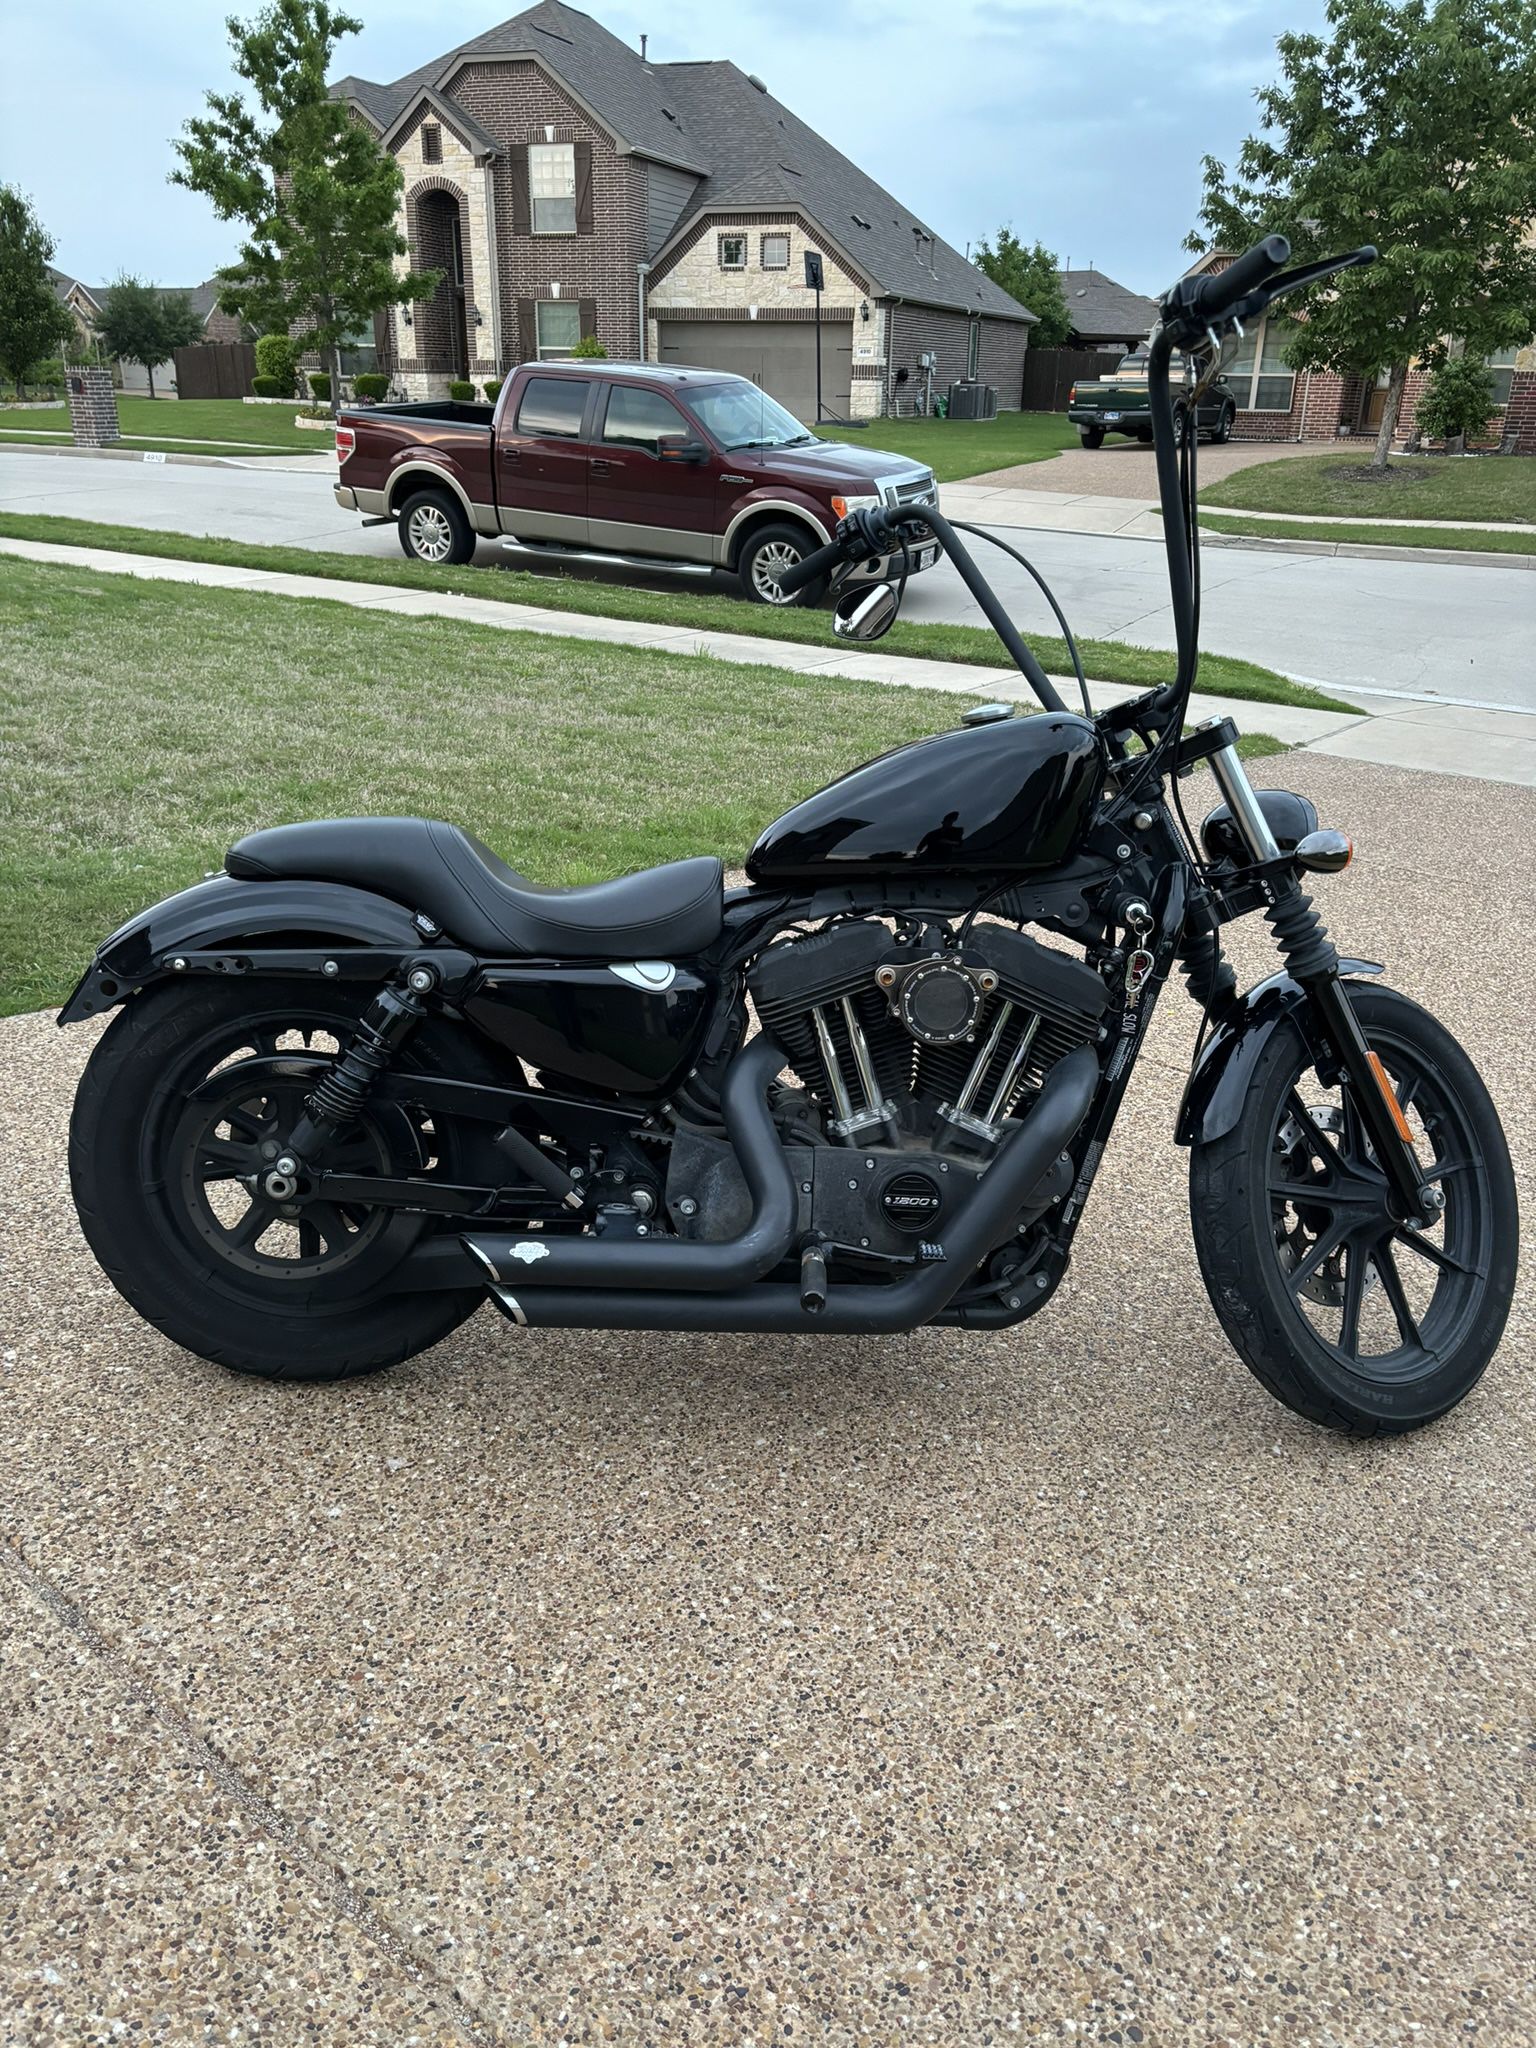 2020 Harley Davidson Iron 1200